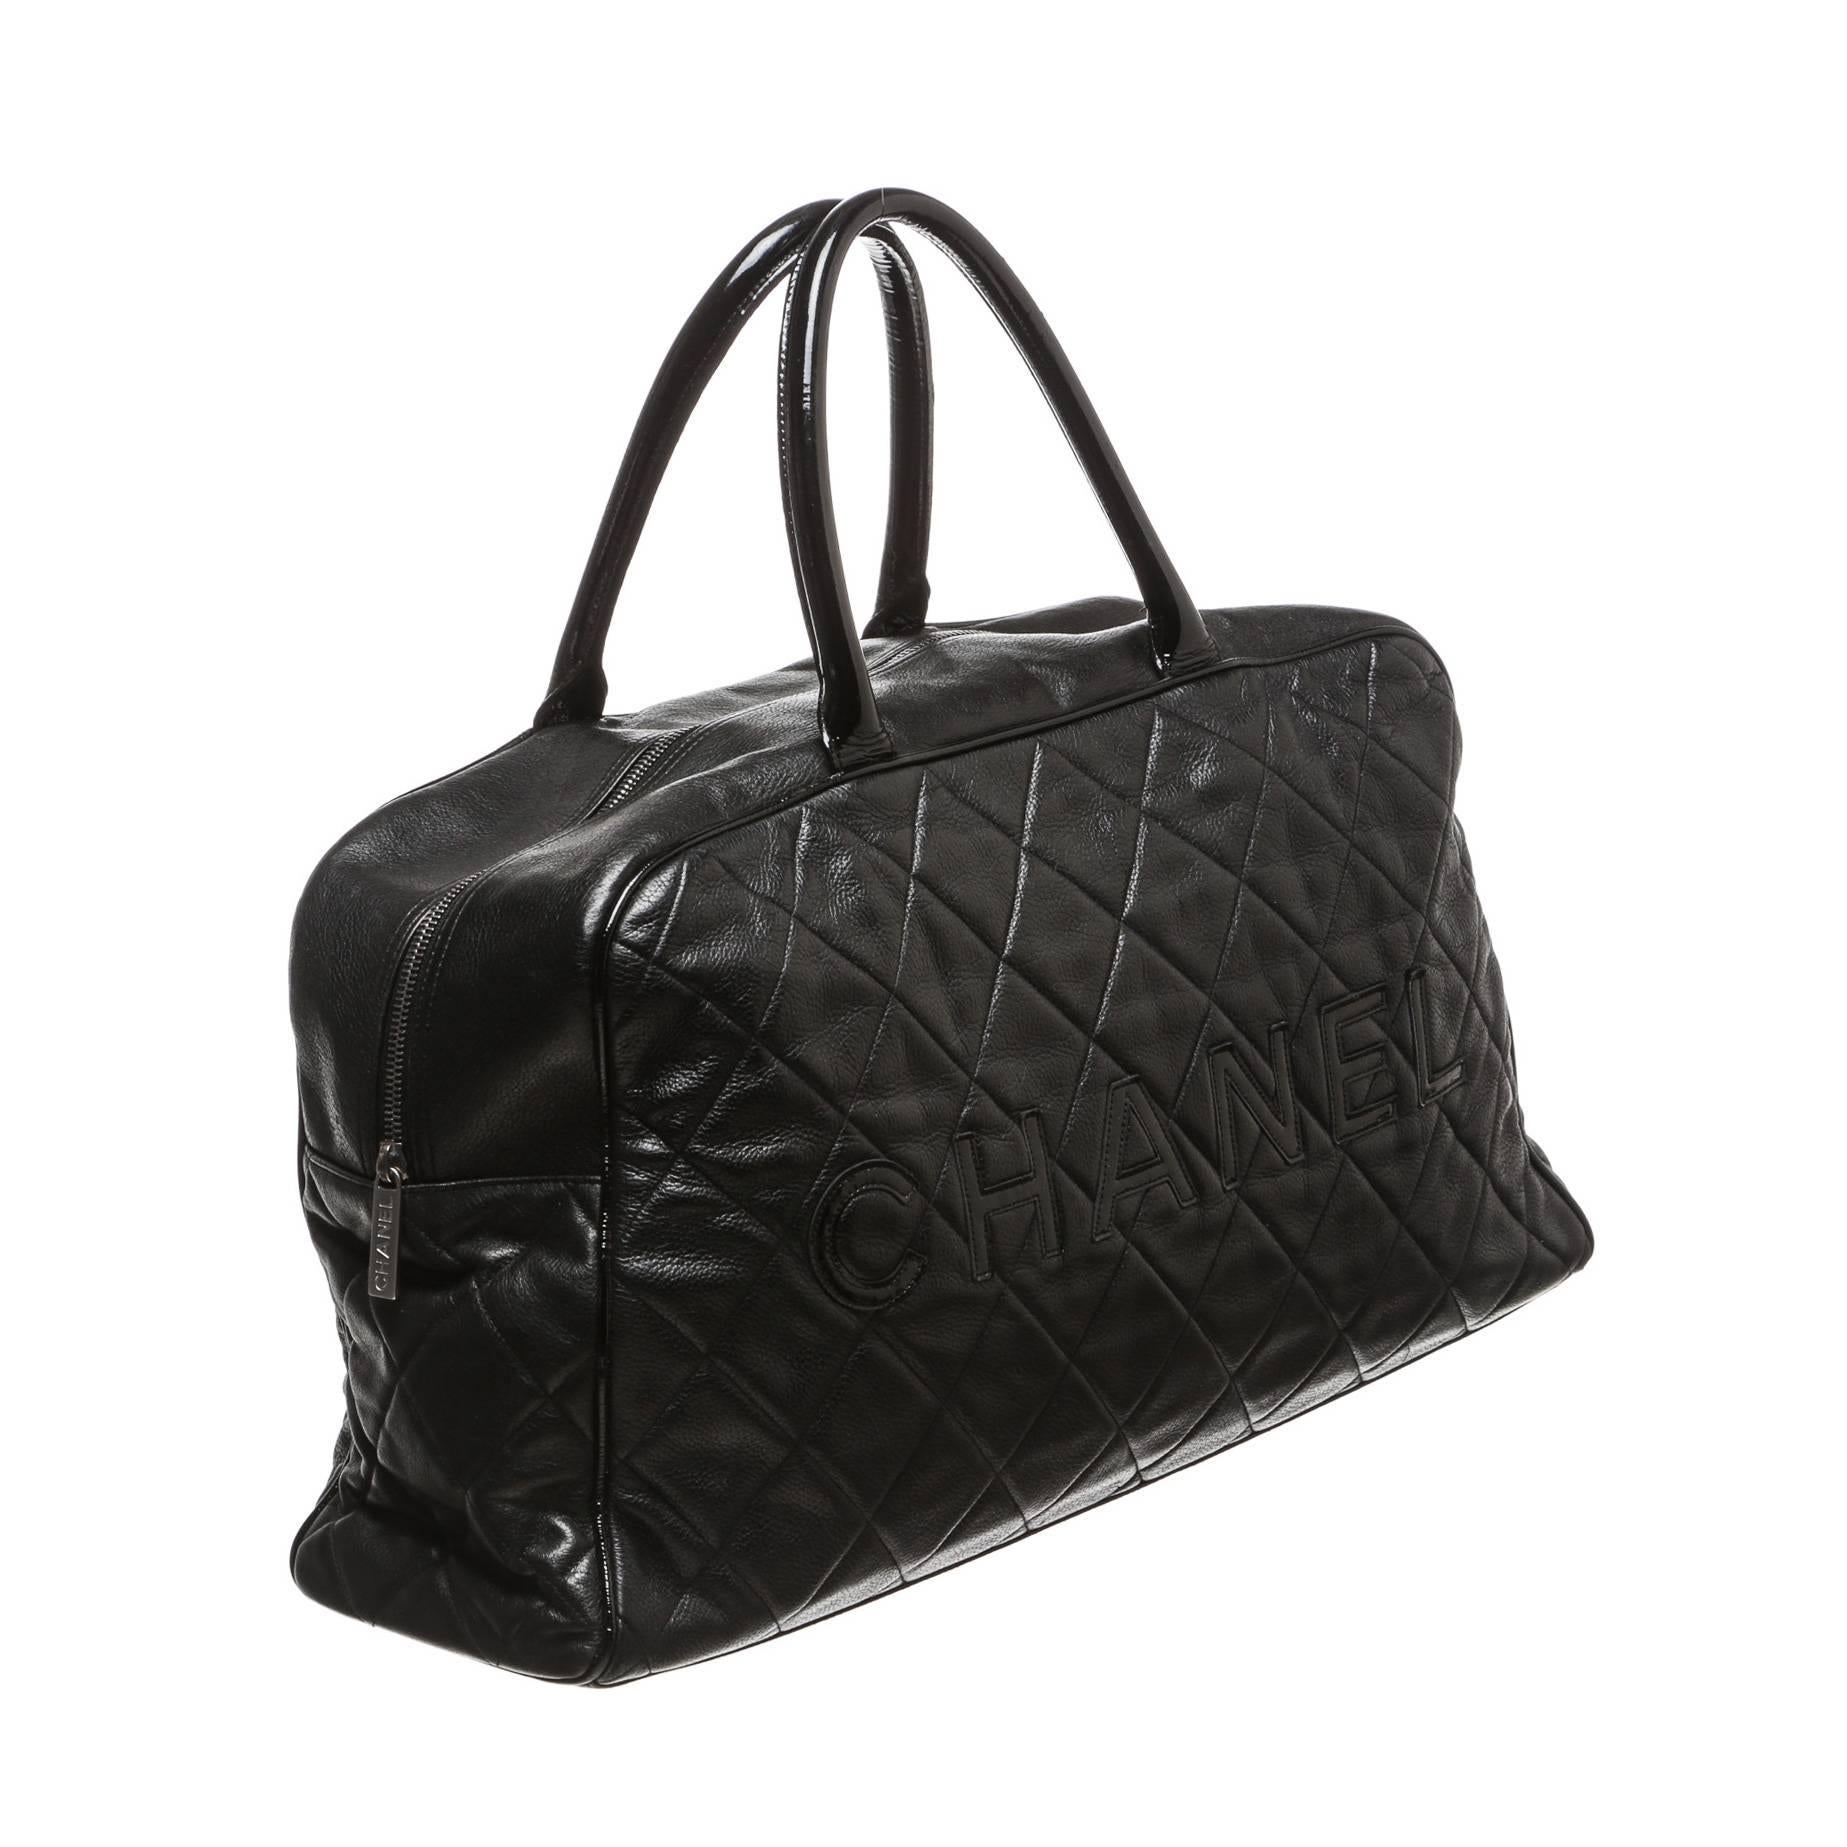 Chanel Black Caviar Travel Bag For Sale